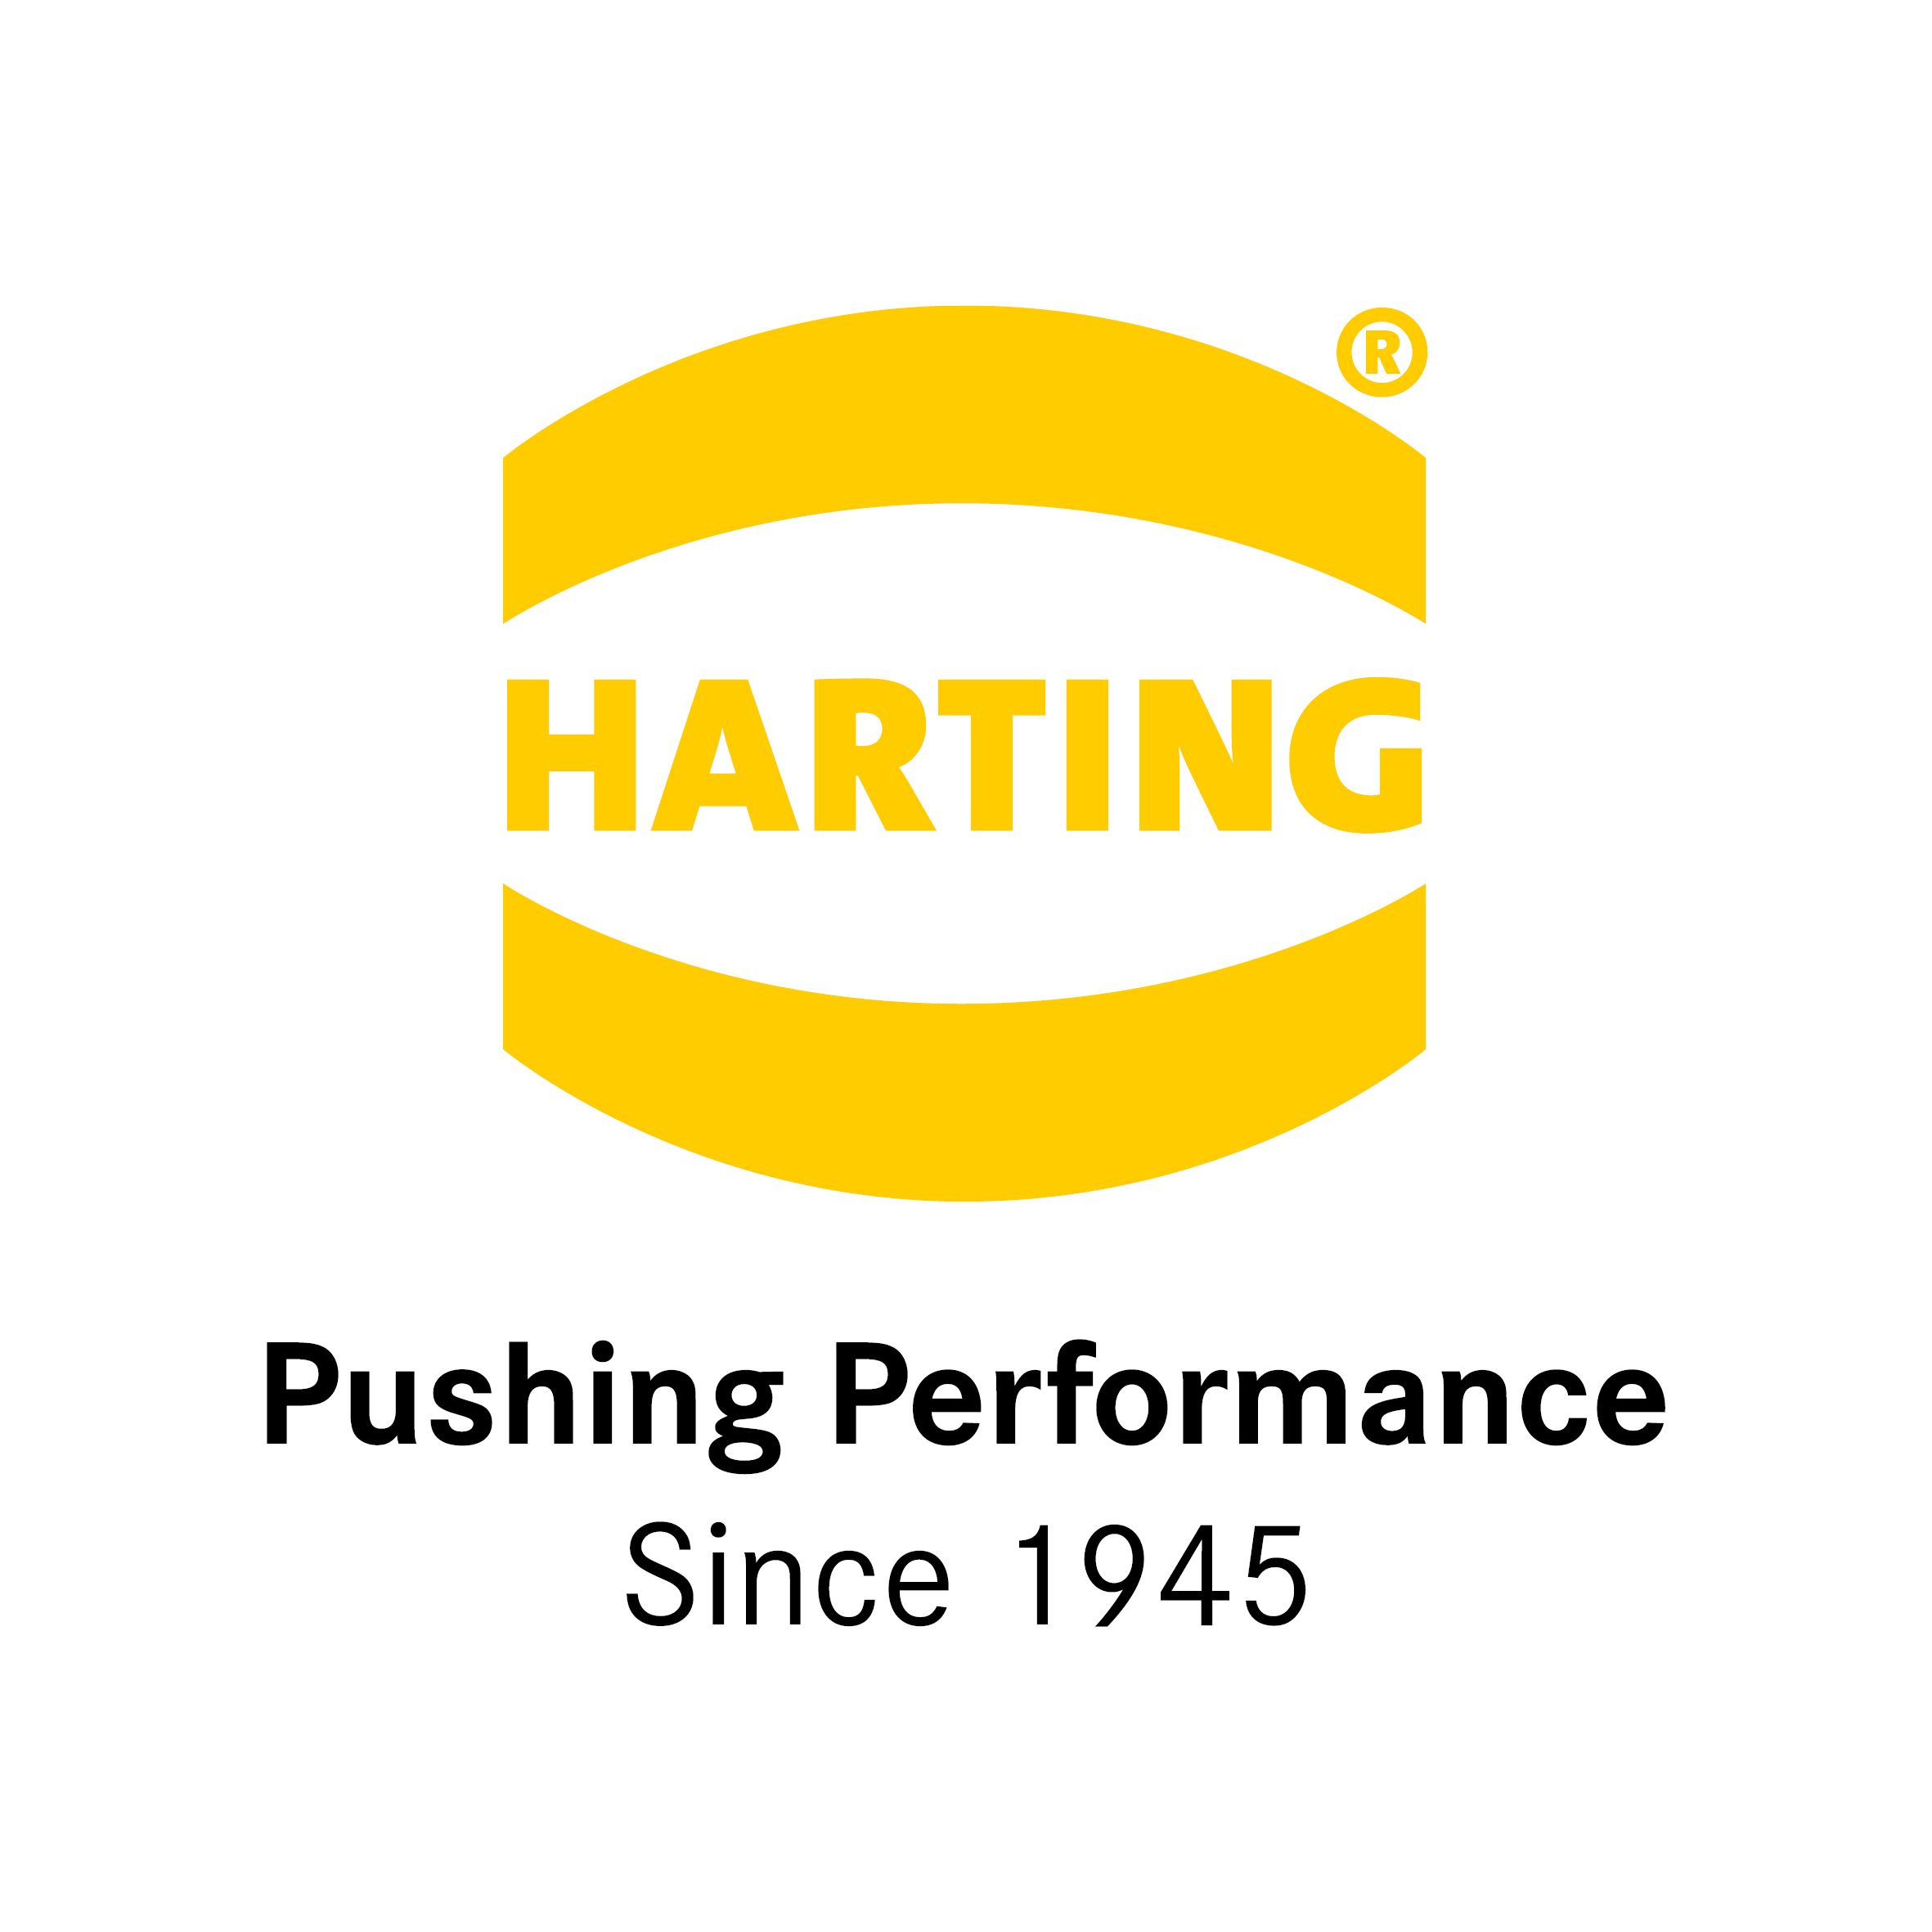 The logo of ACP Member Harting.